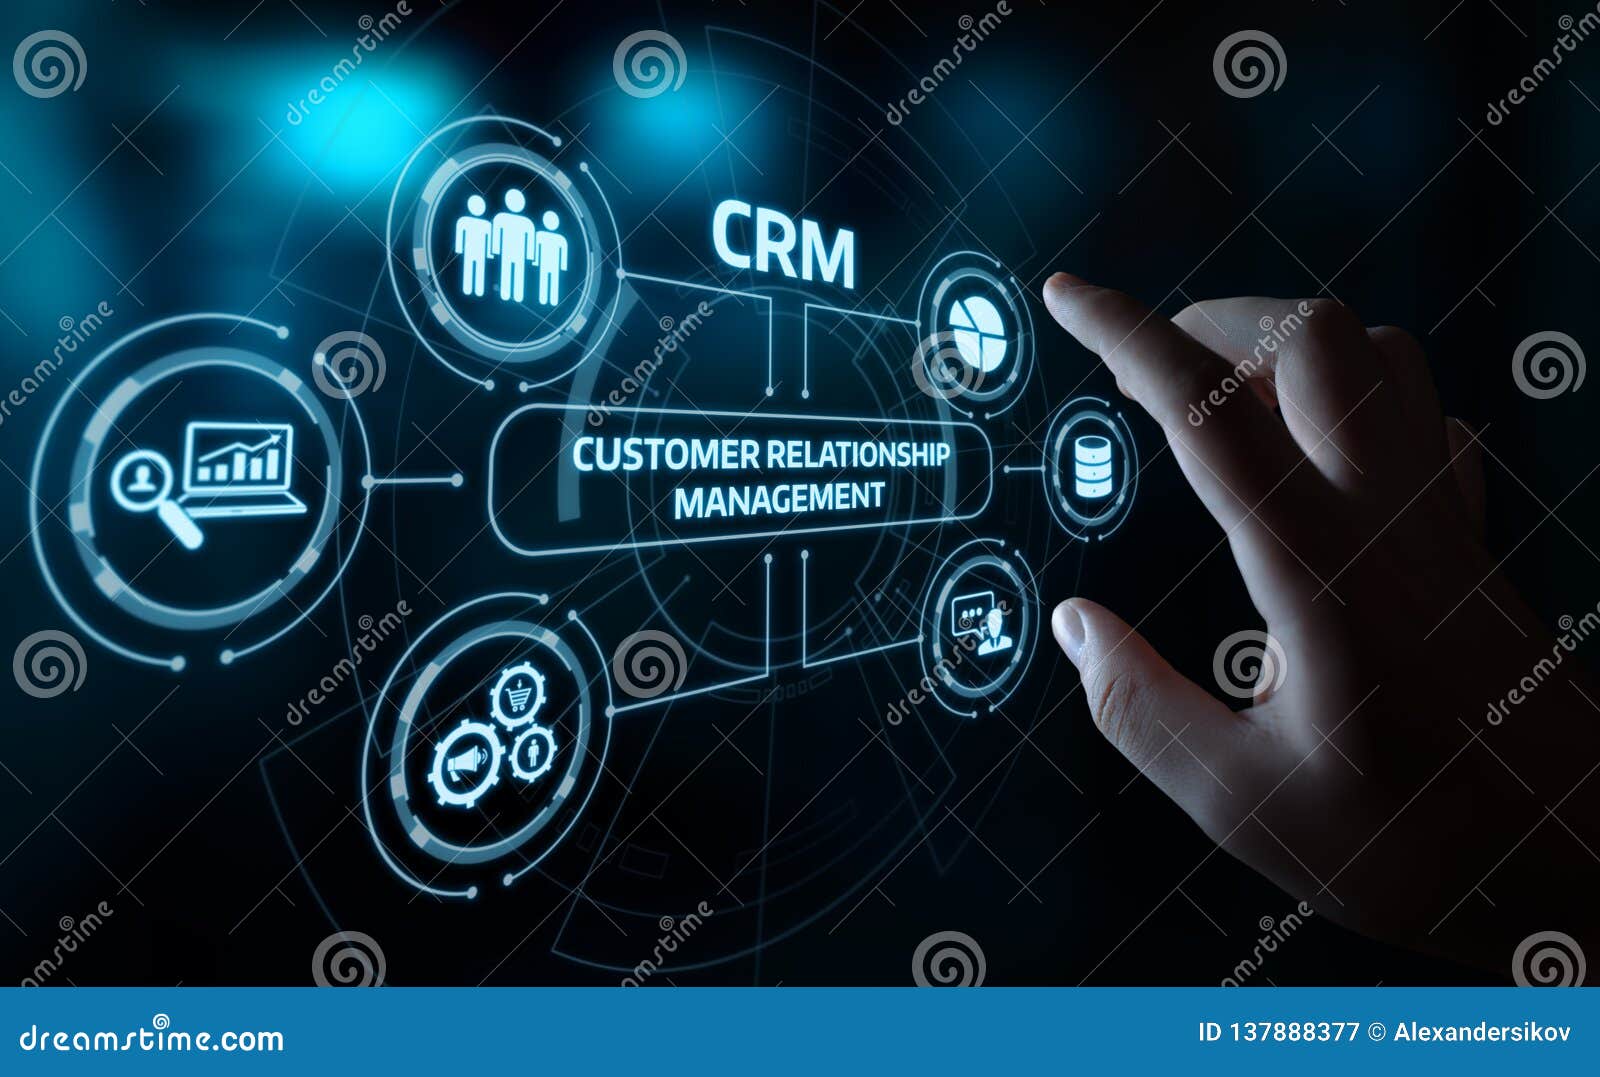 crm customer relationship management business internet techology concept